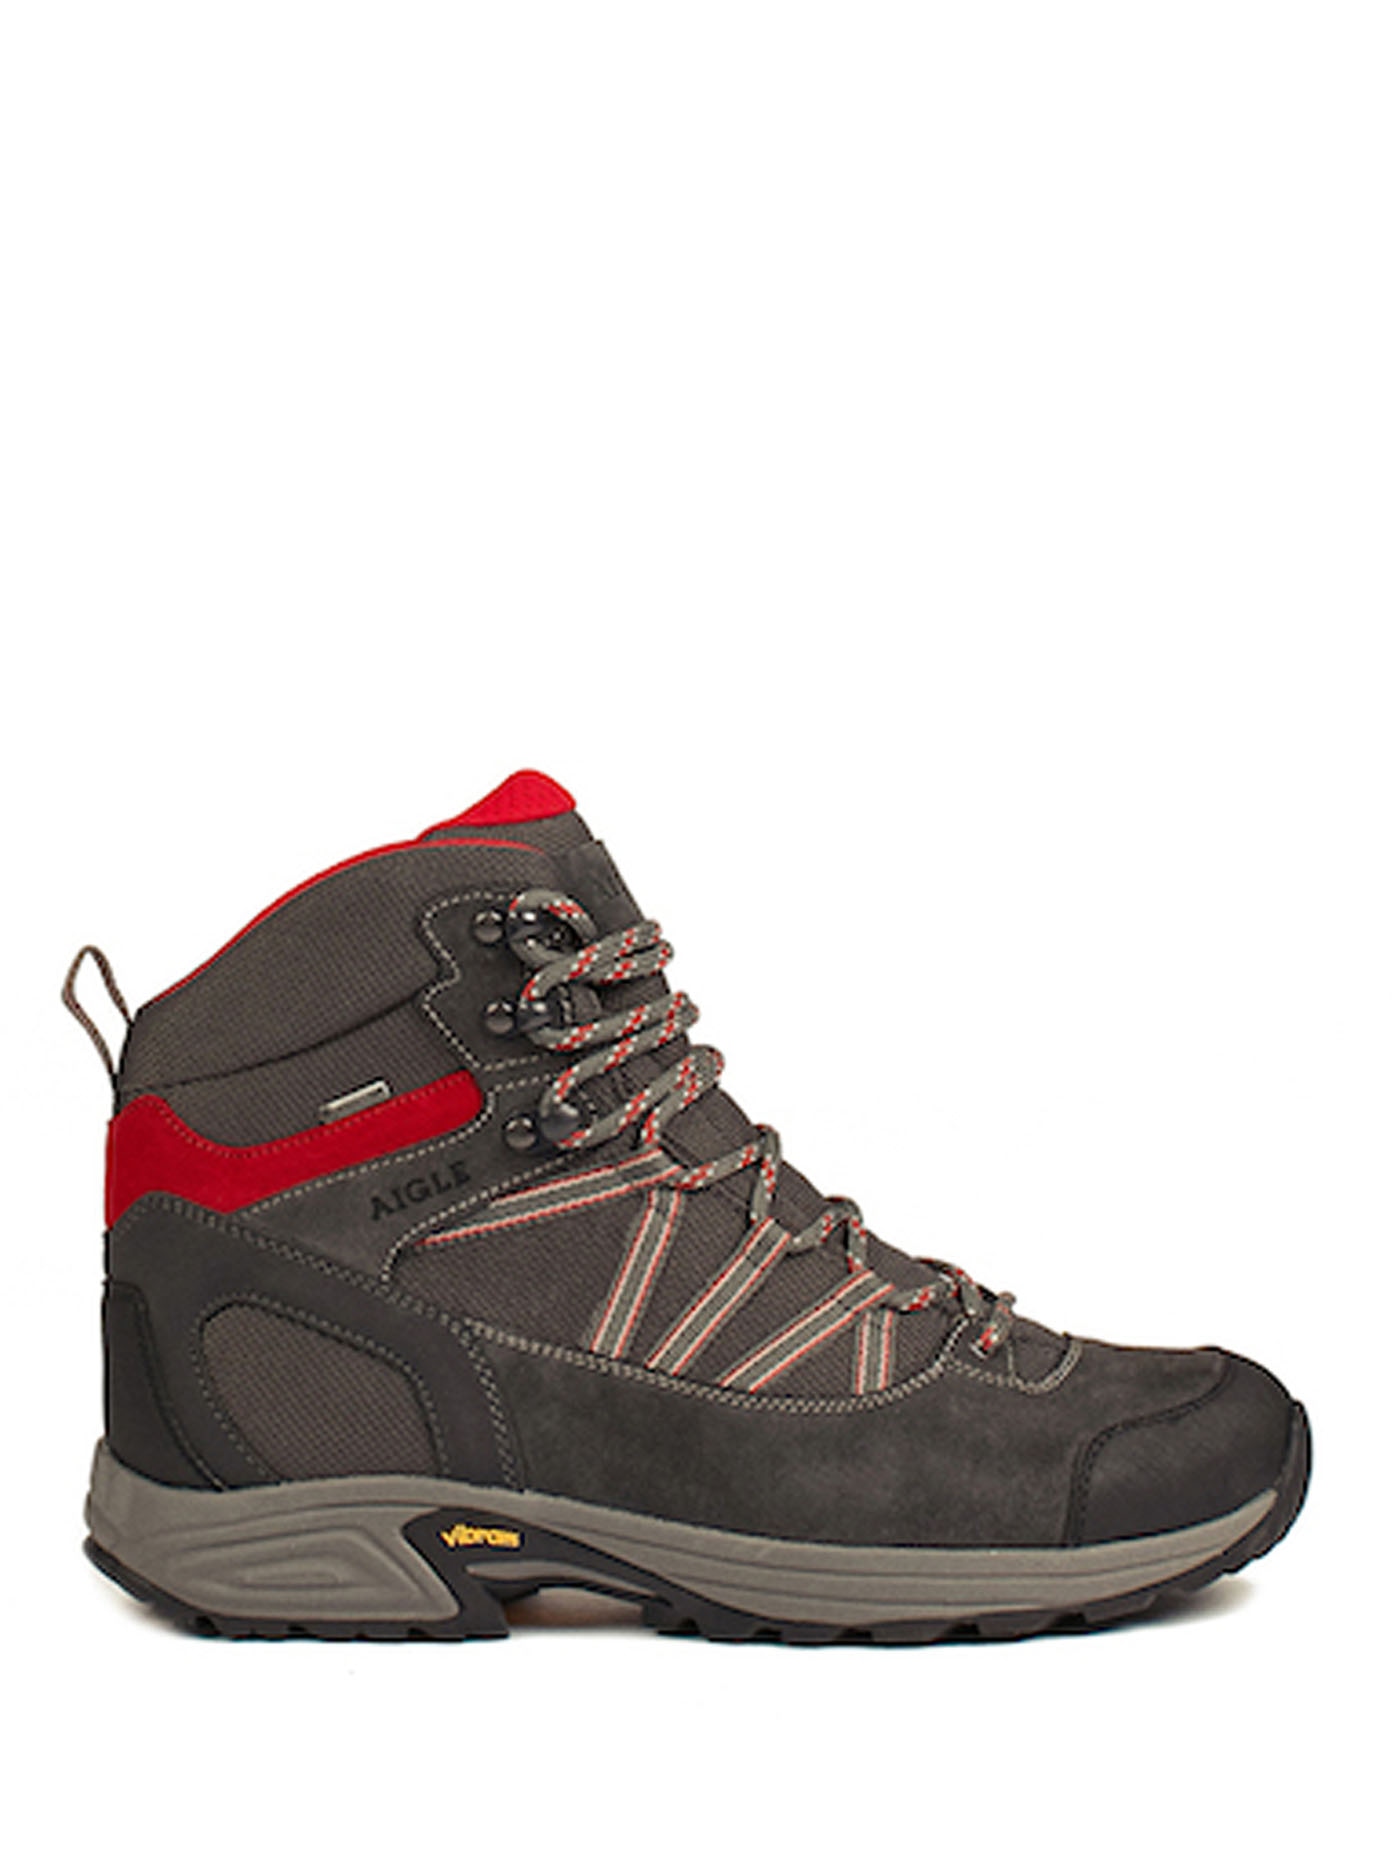 MOOVEN MID GORE-TEX | Men's mid-cut Gore-Tex® hiking shoes Darknavy ...